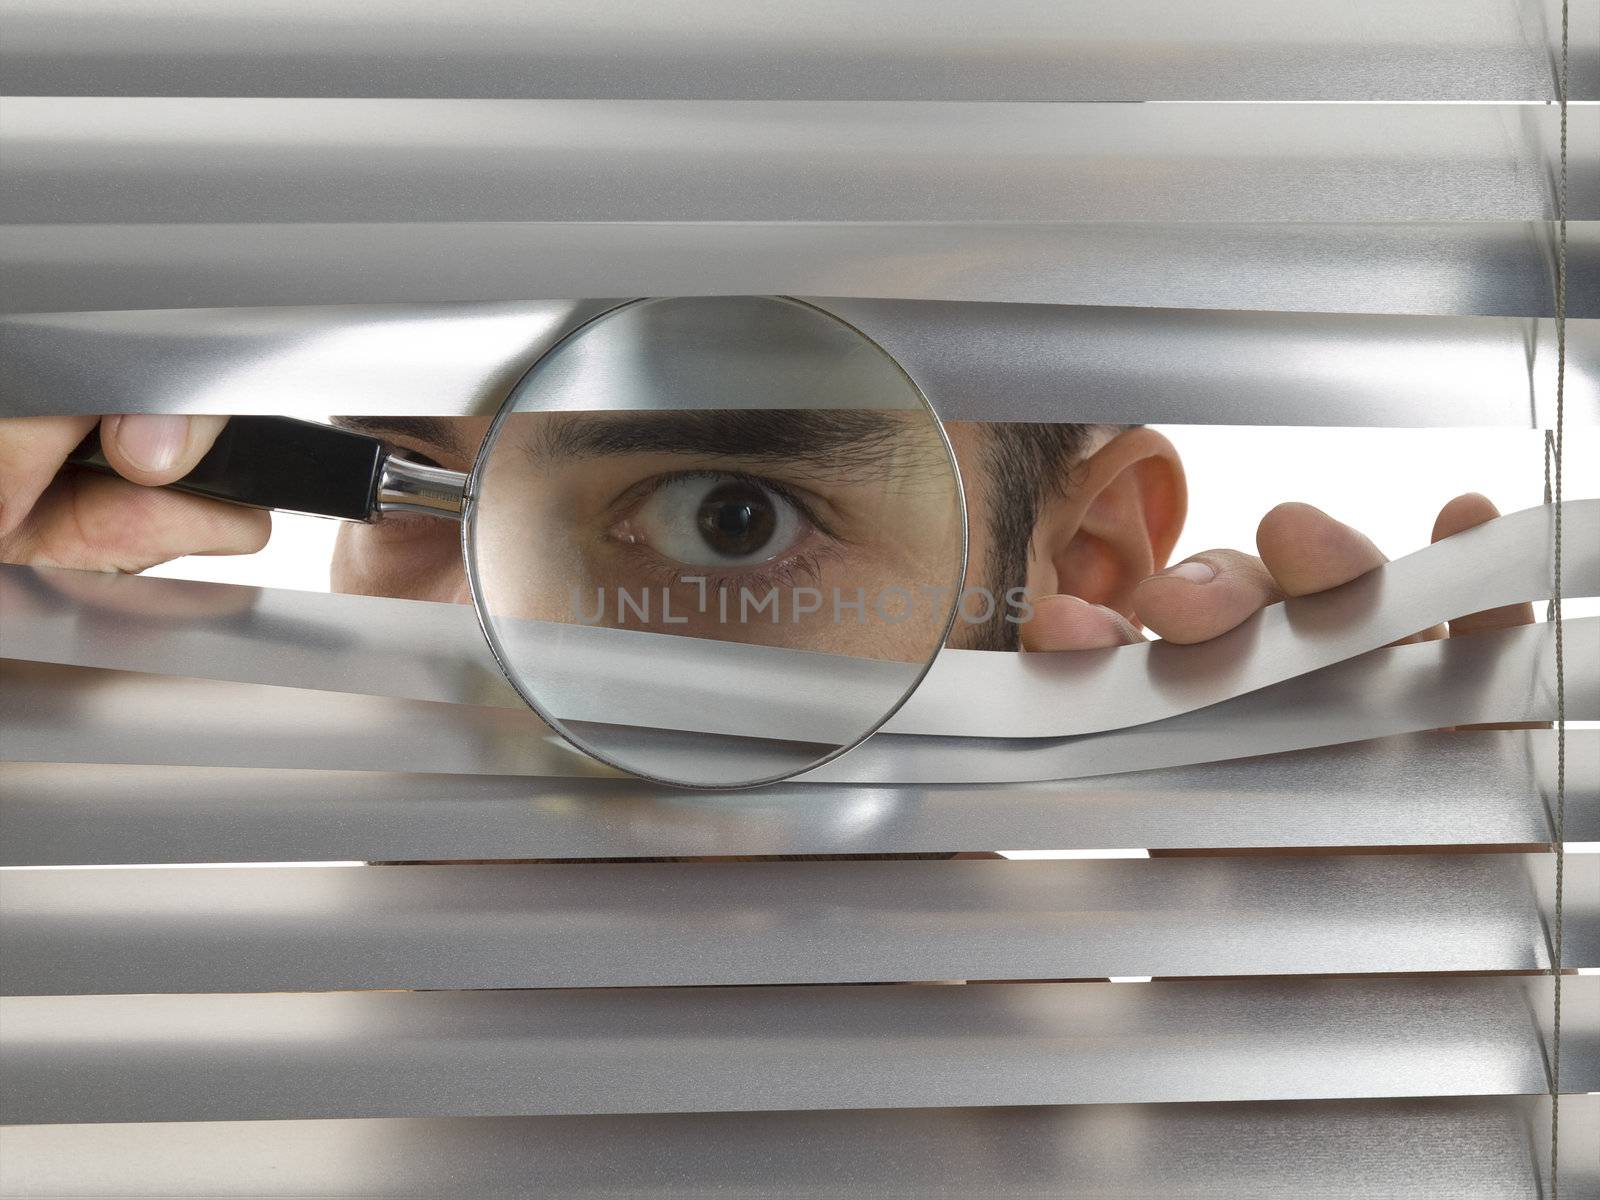 Extreme peeping Tom by antonprado